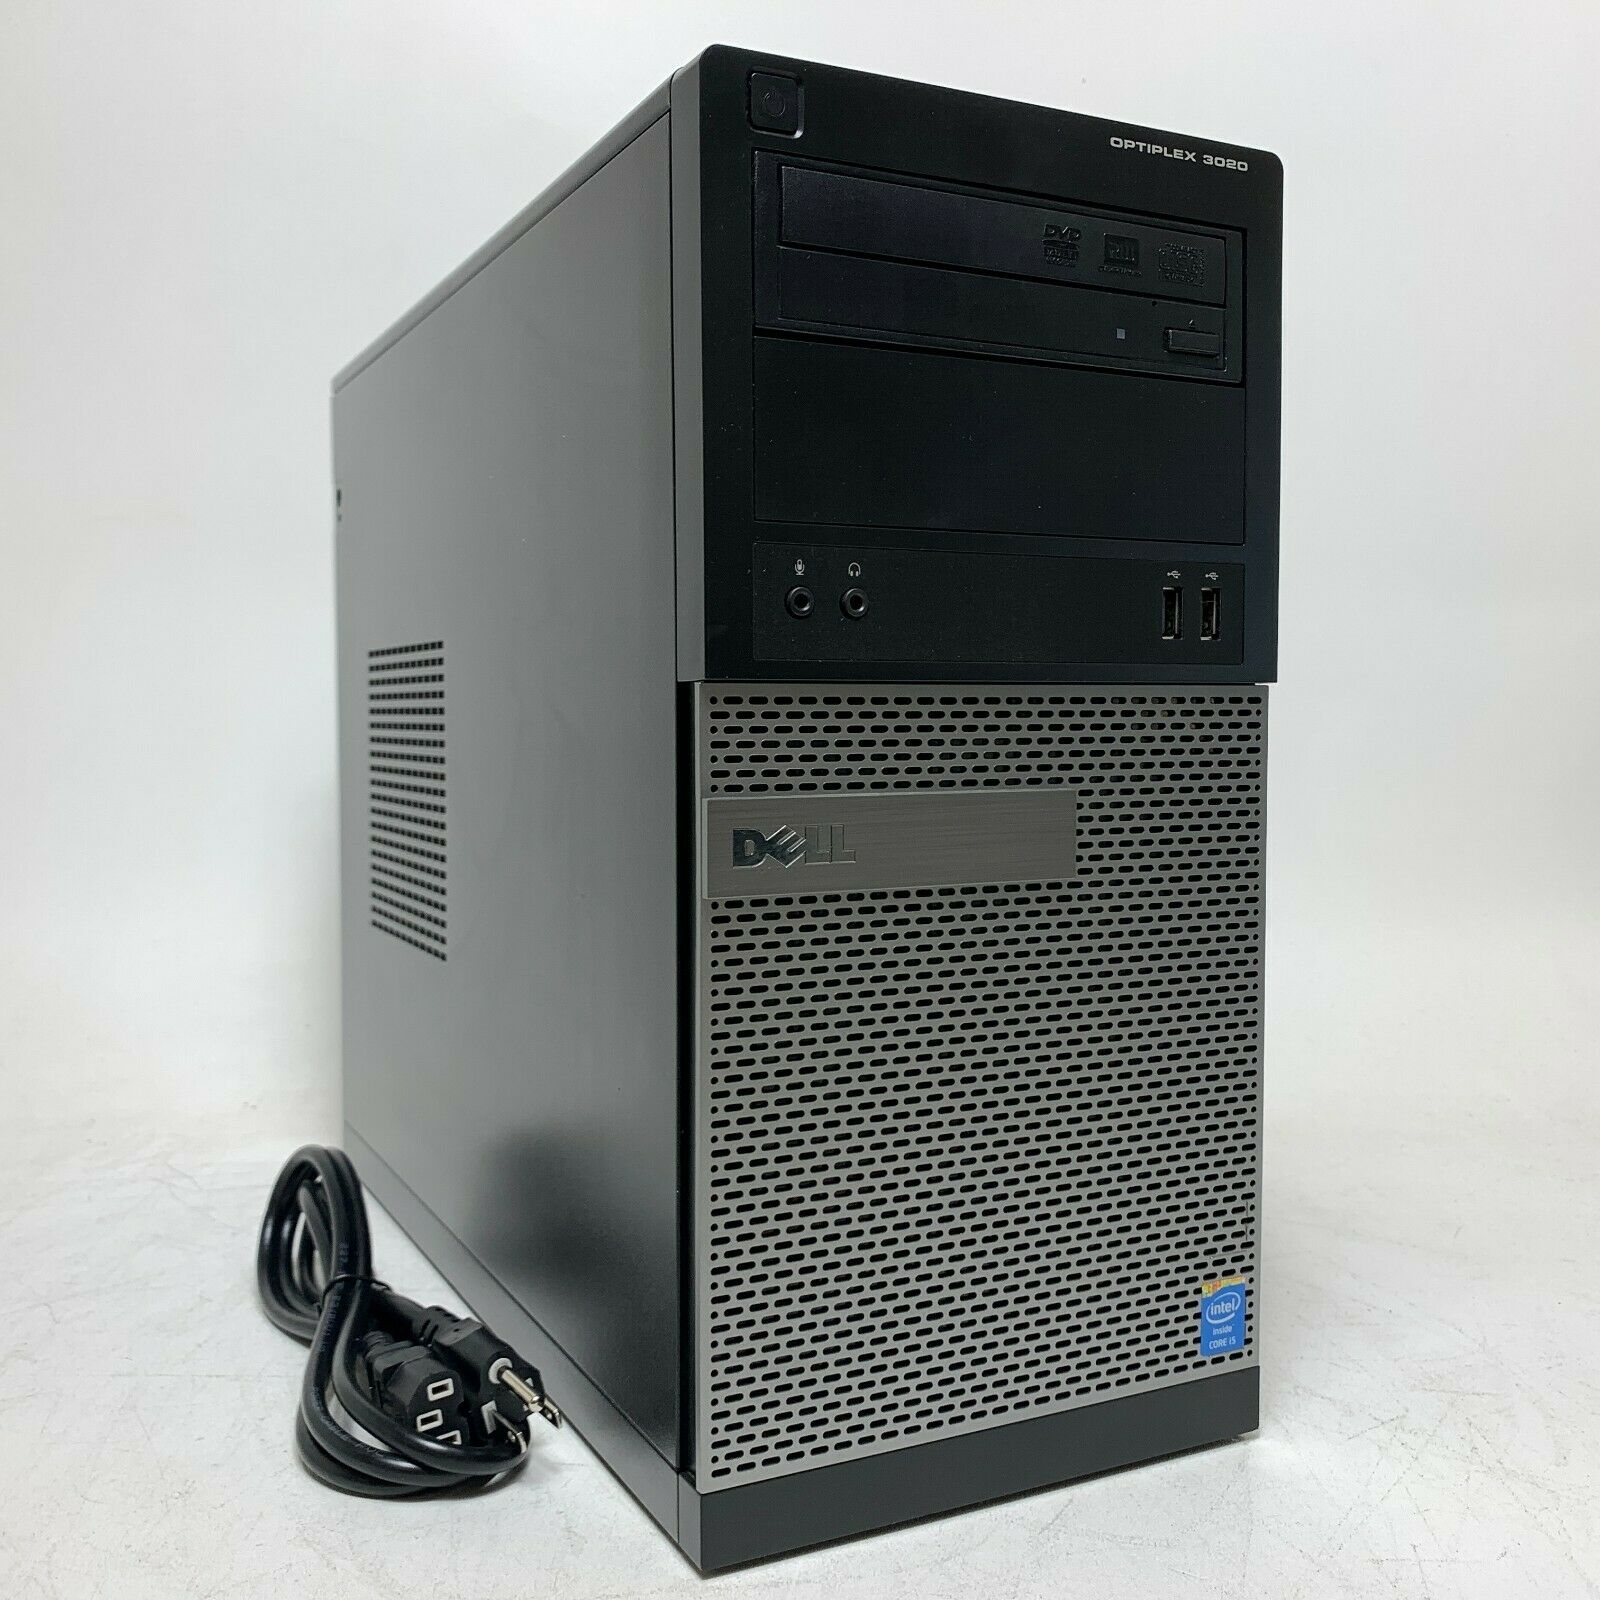 Dell Optiplex 3020 Tower Windows 10 Pro Computer - Discount